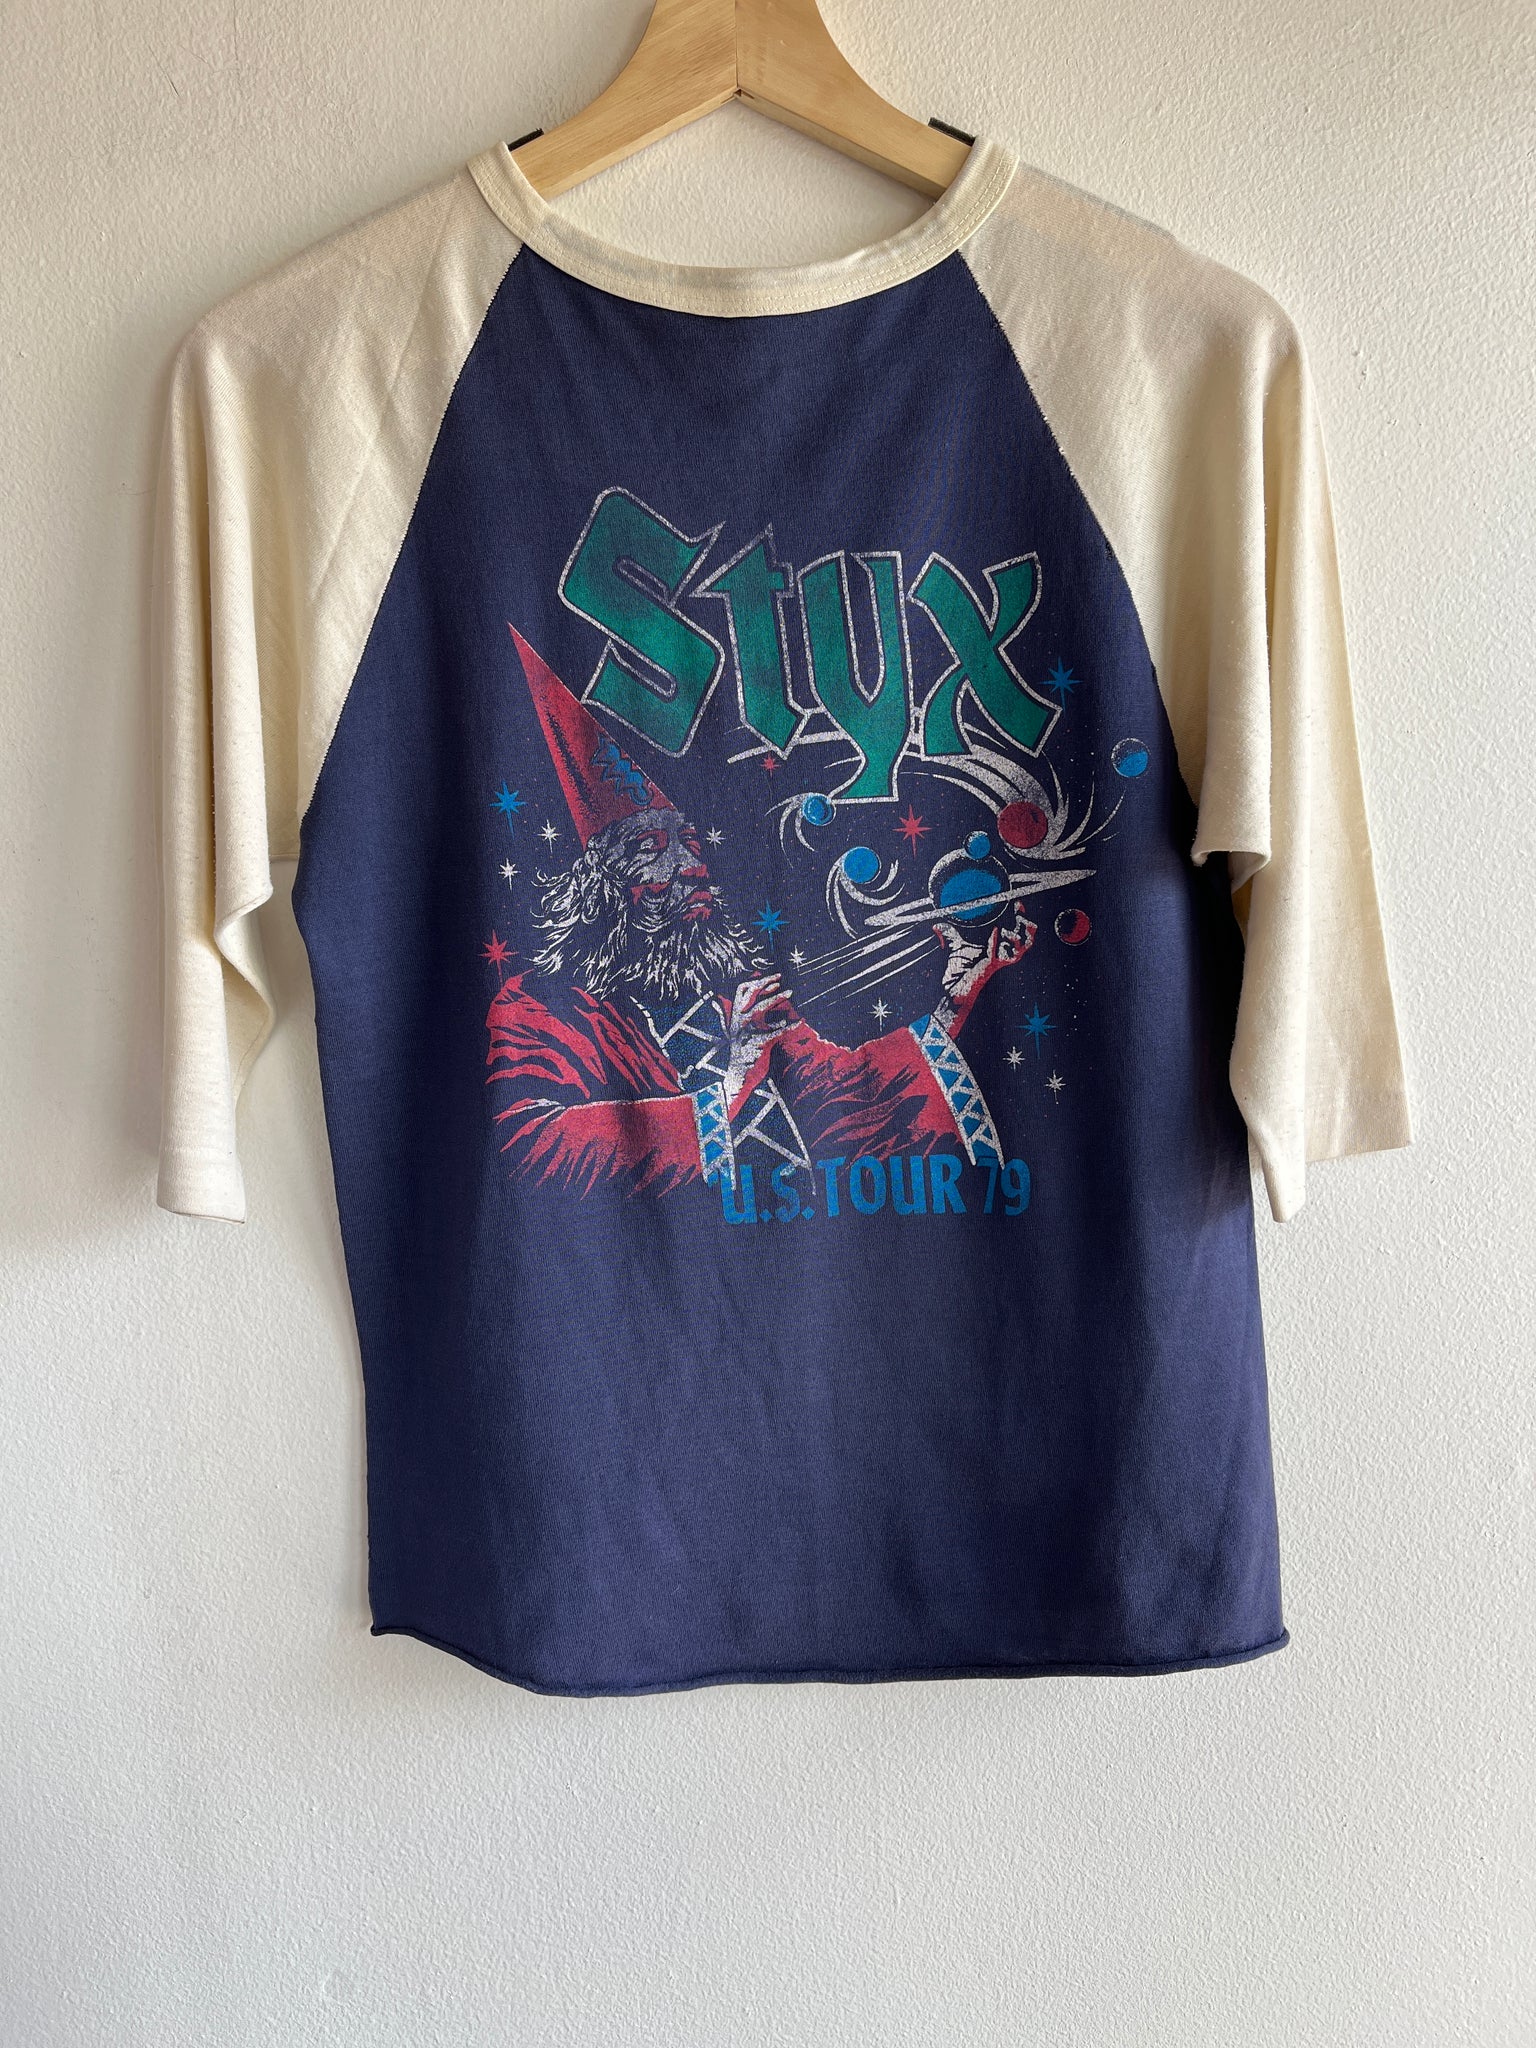 Vintage 1979 Styx Tour T-Shirt